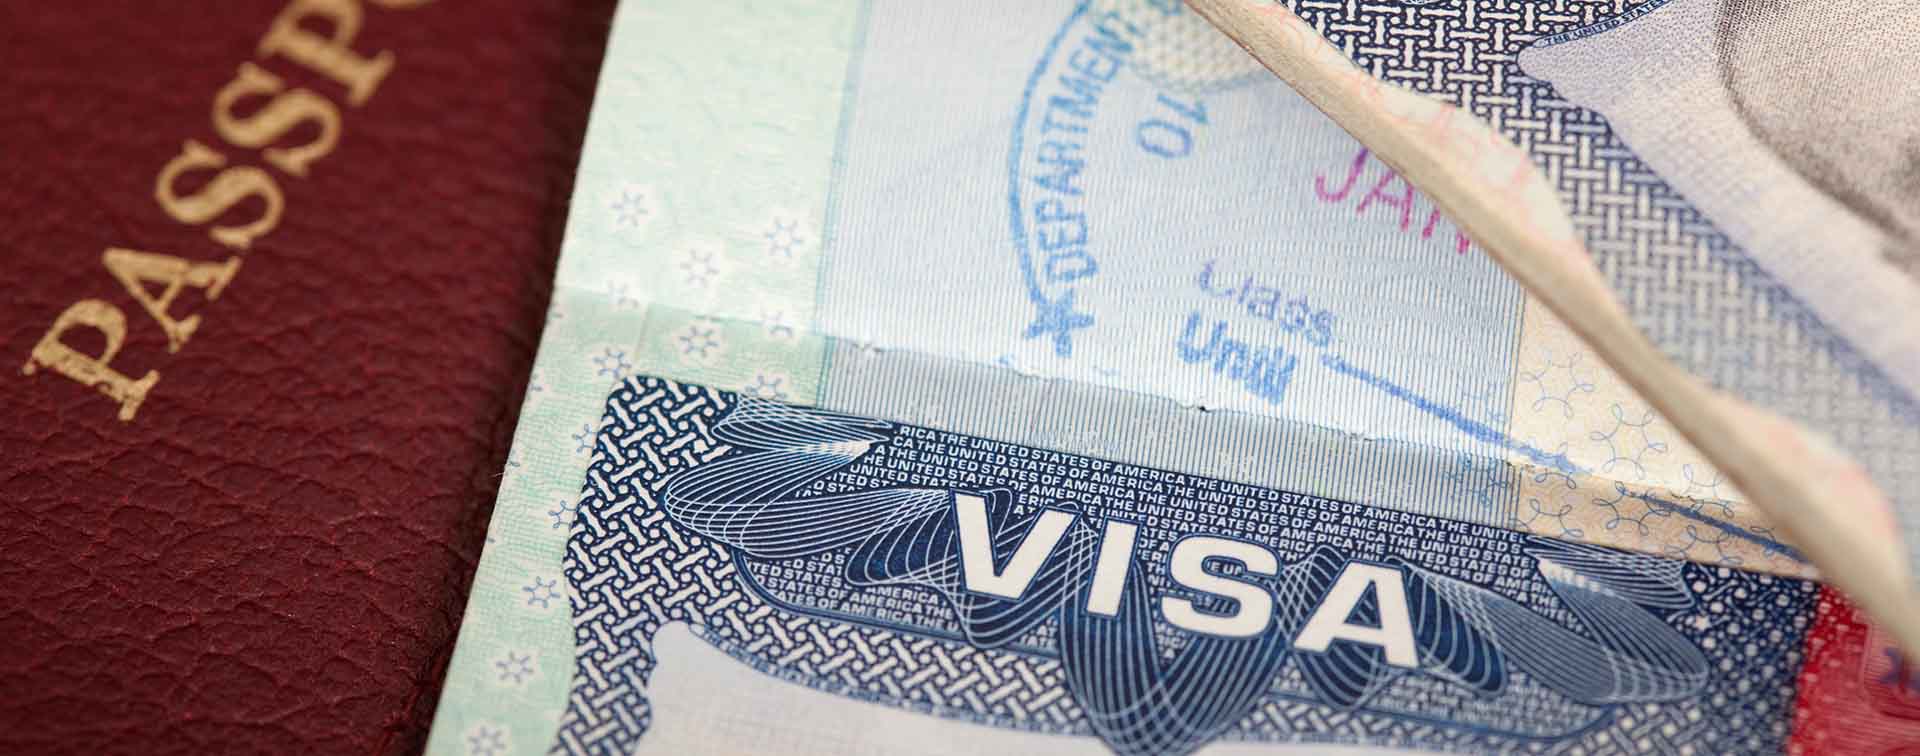 Passport cover and visas